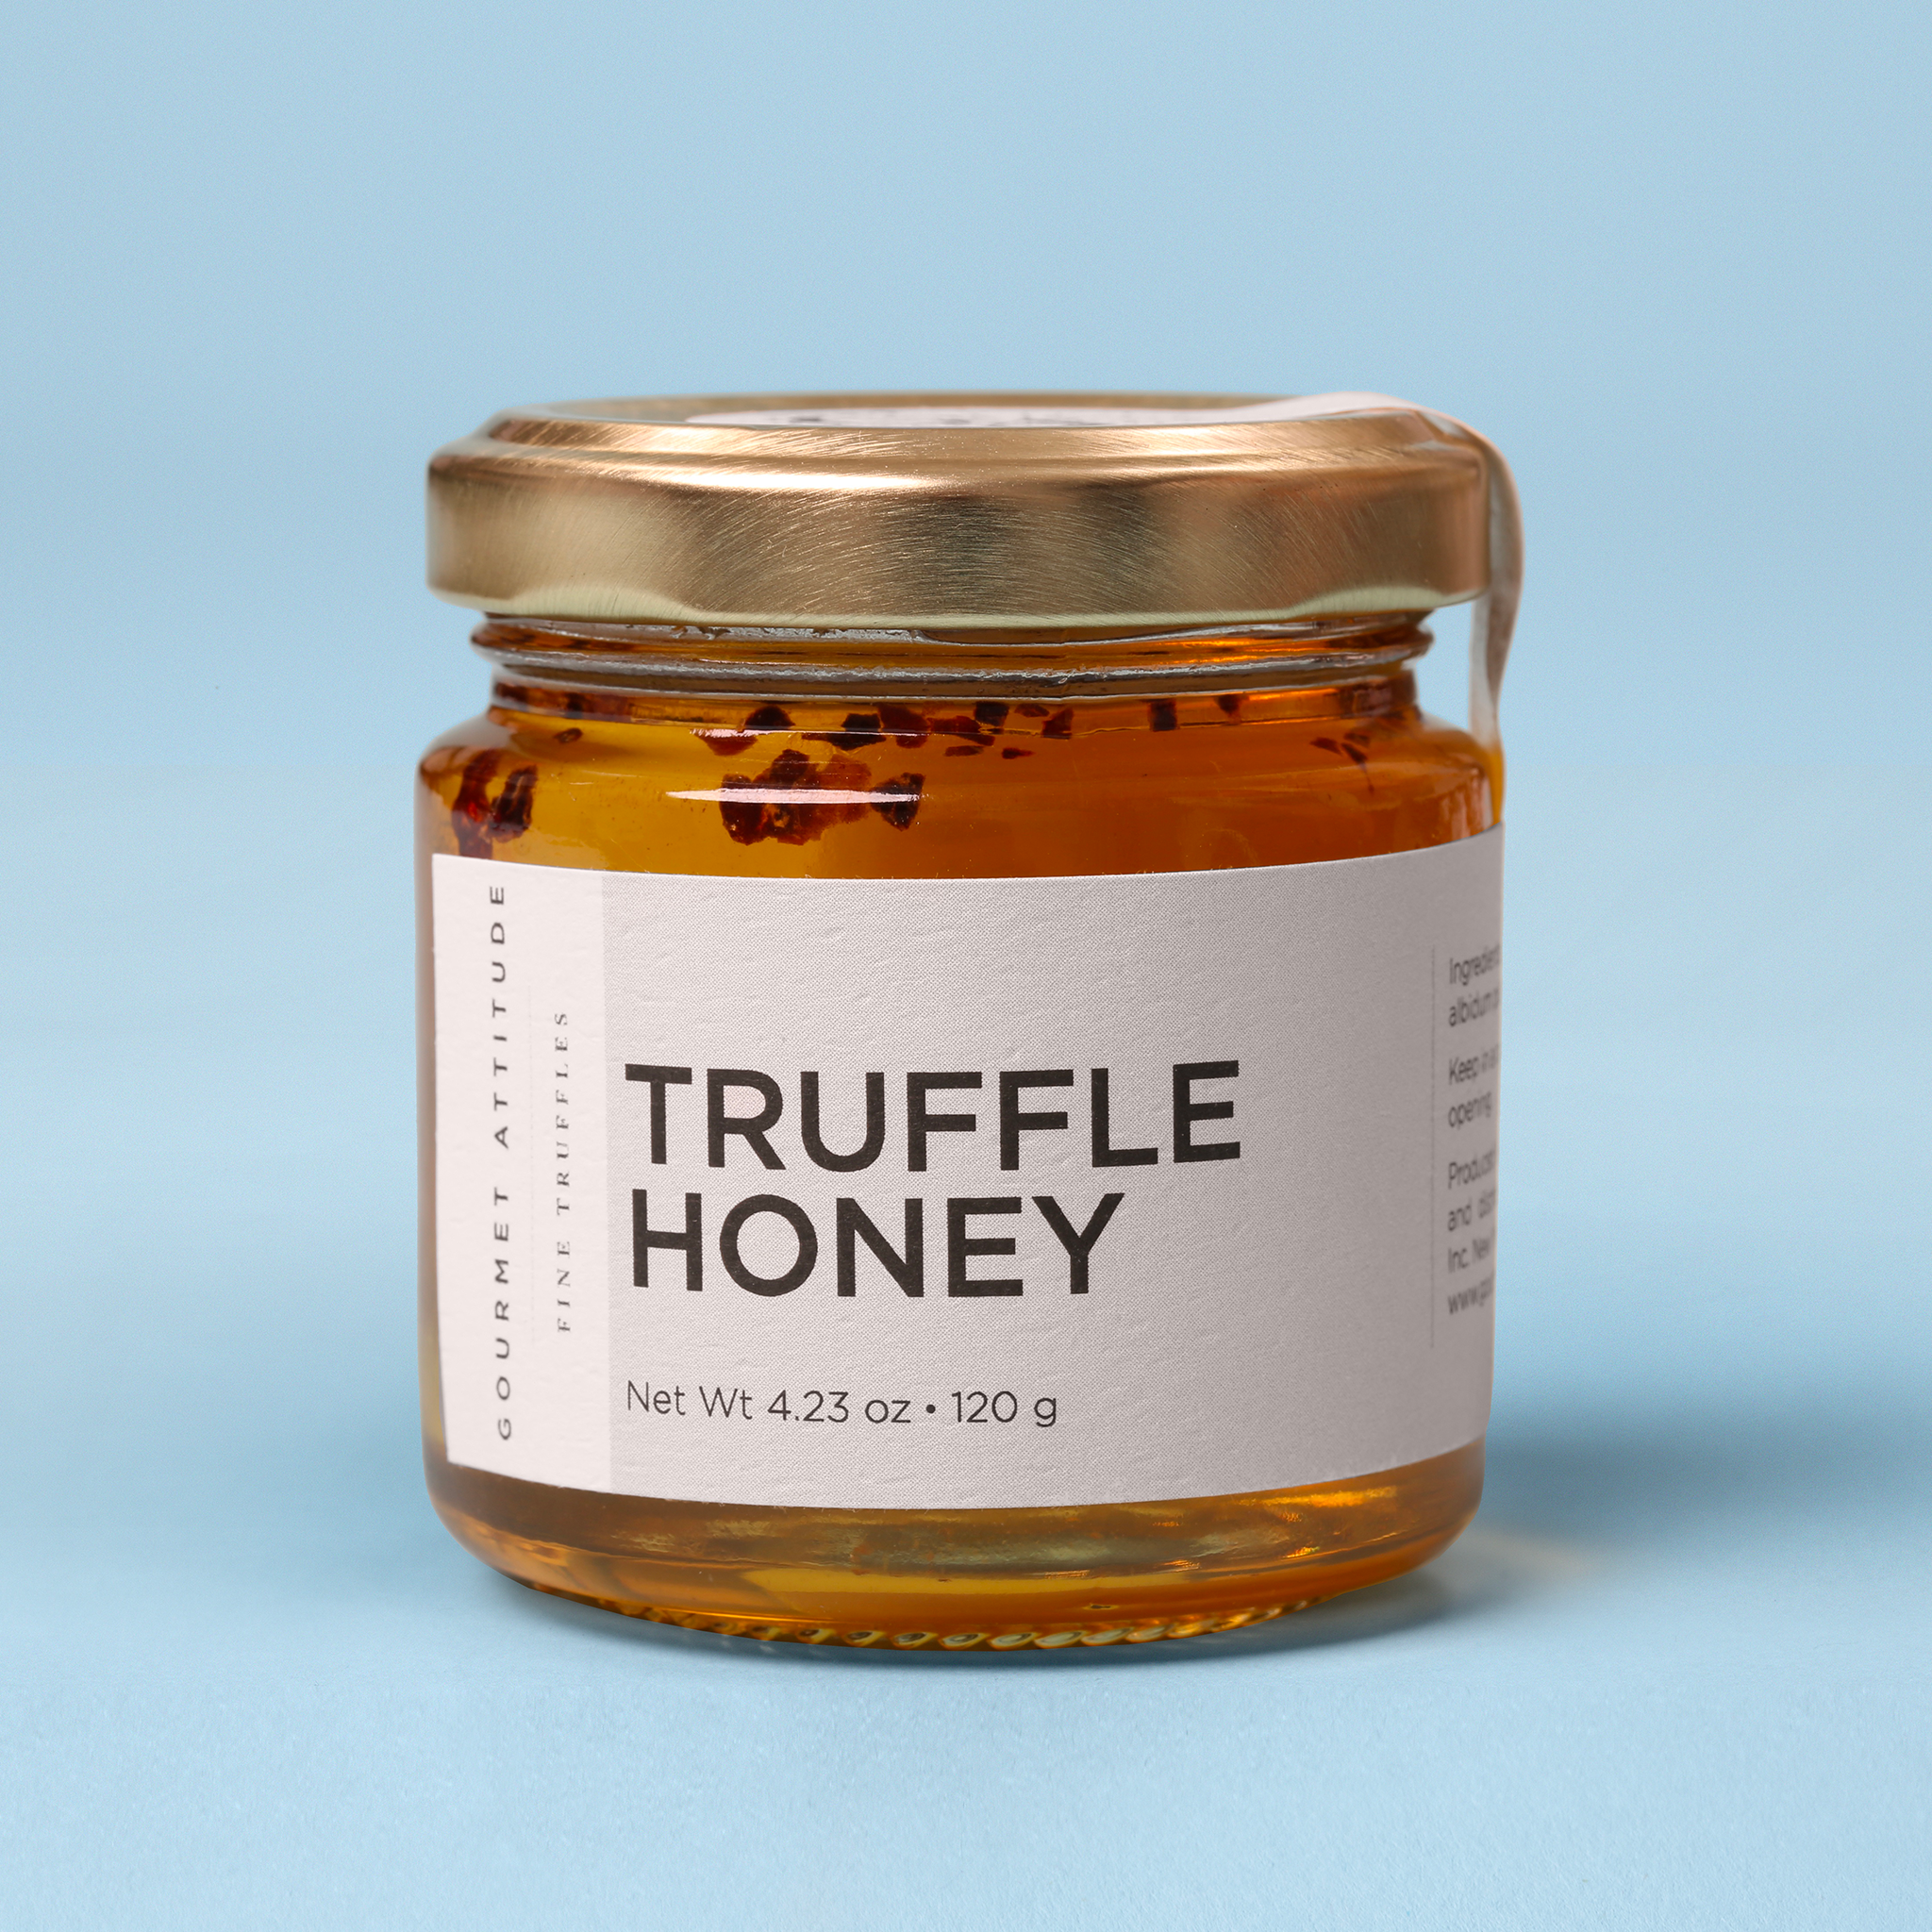 Truffle Honey by Gourmet Attitude